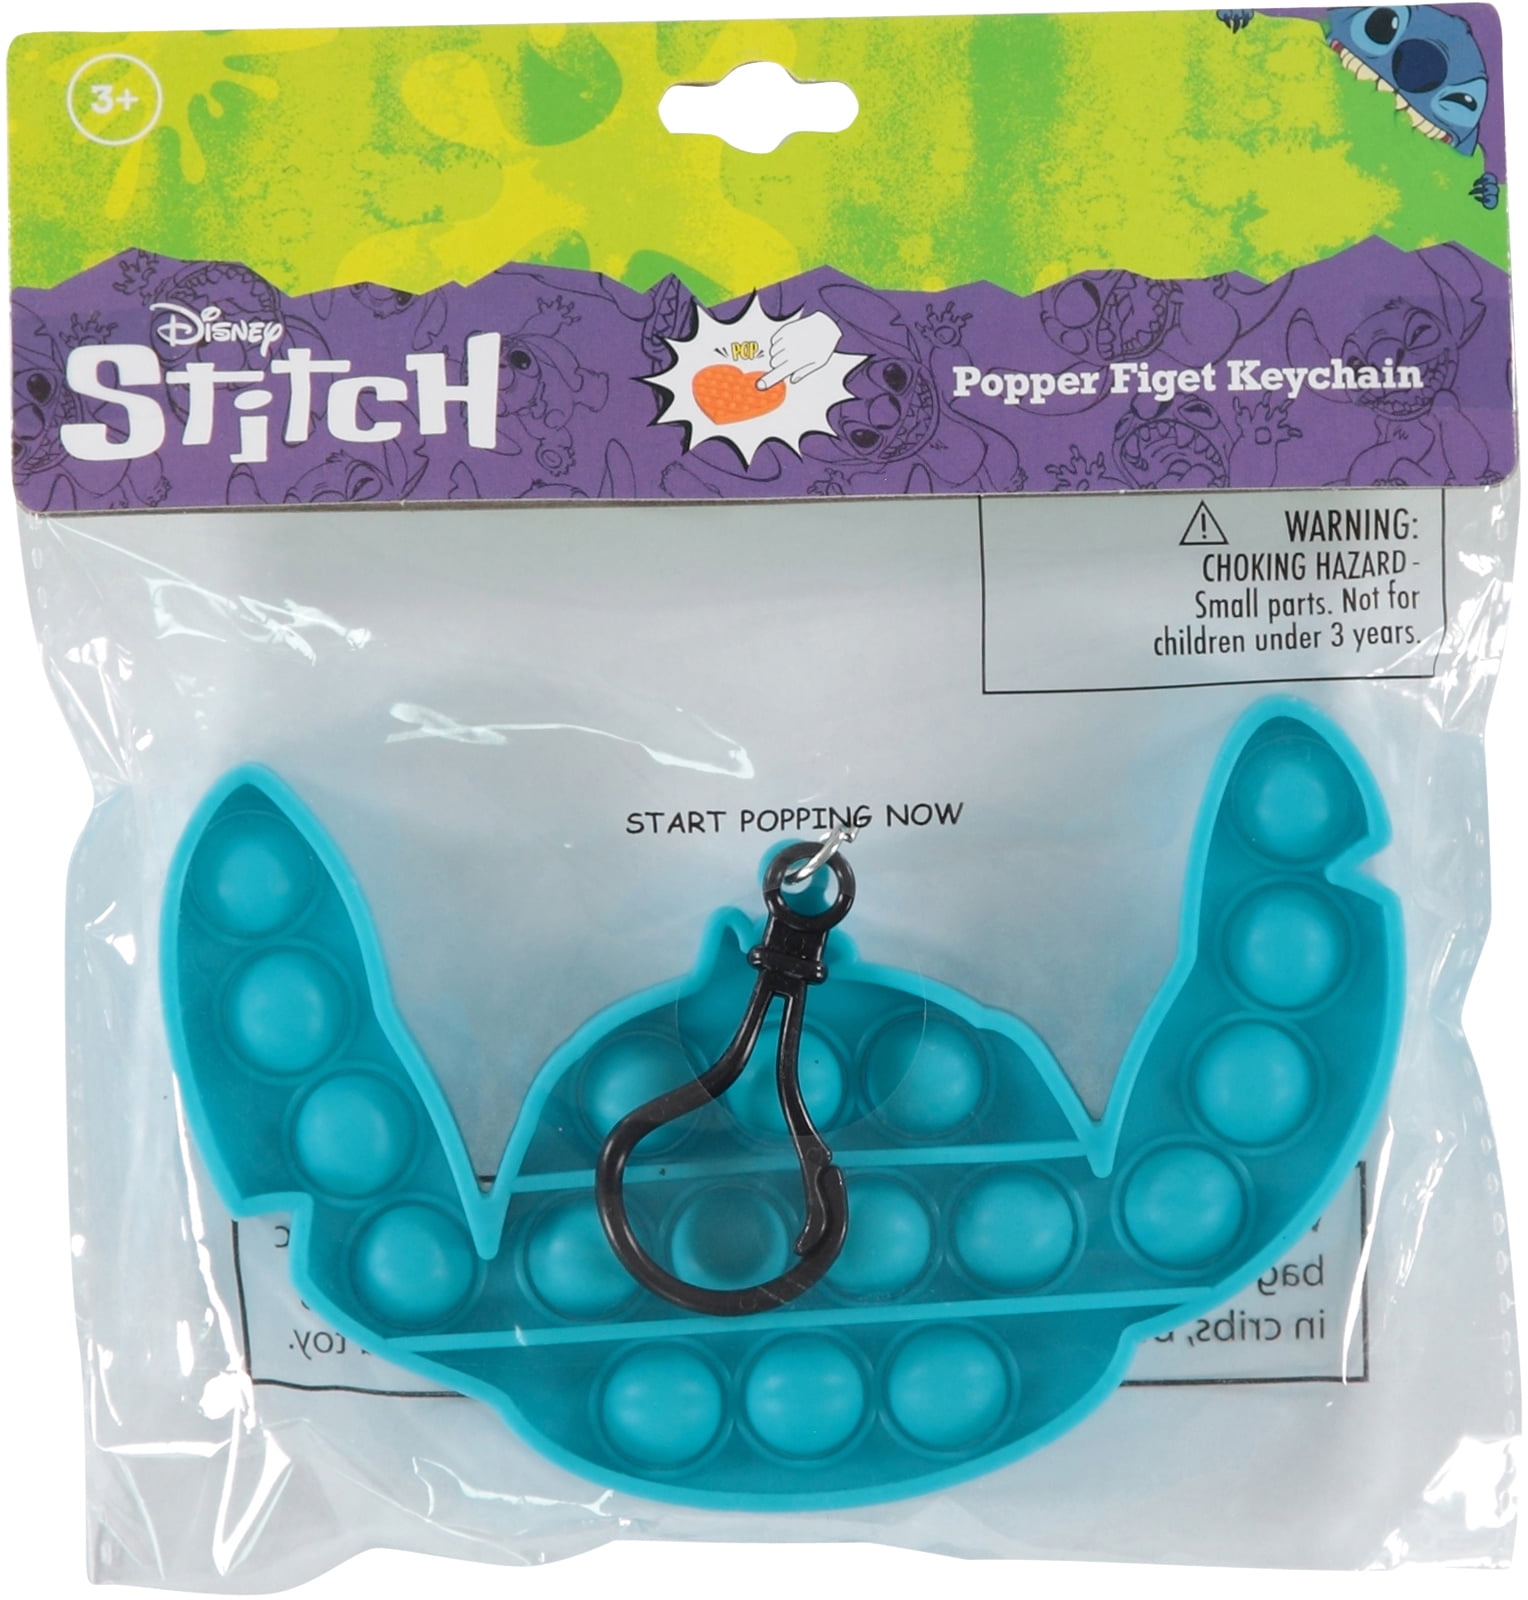 Stitch Shaped Pop Fidget Keychain In Bag With Header